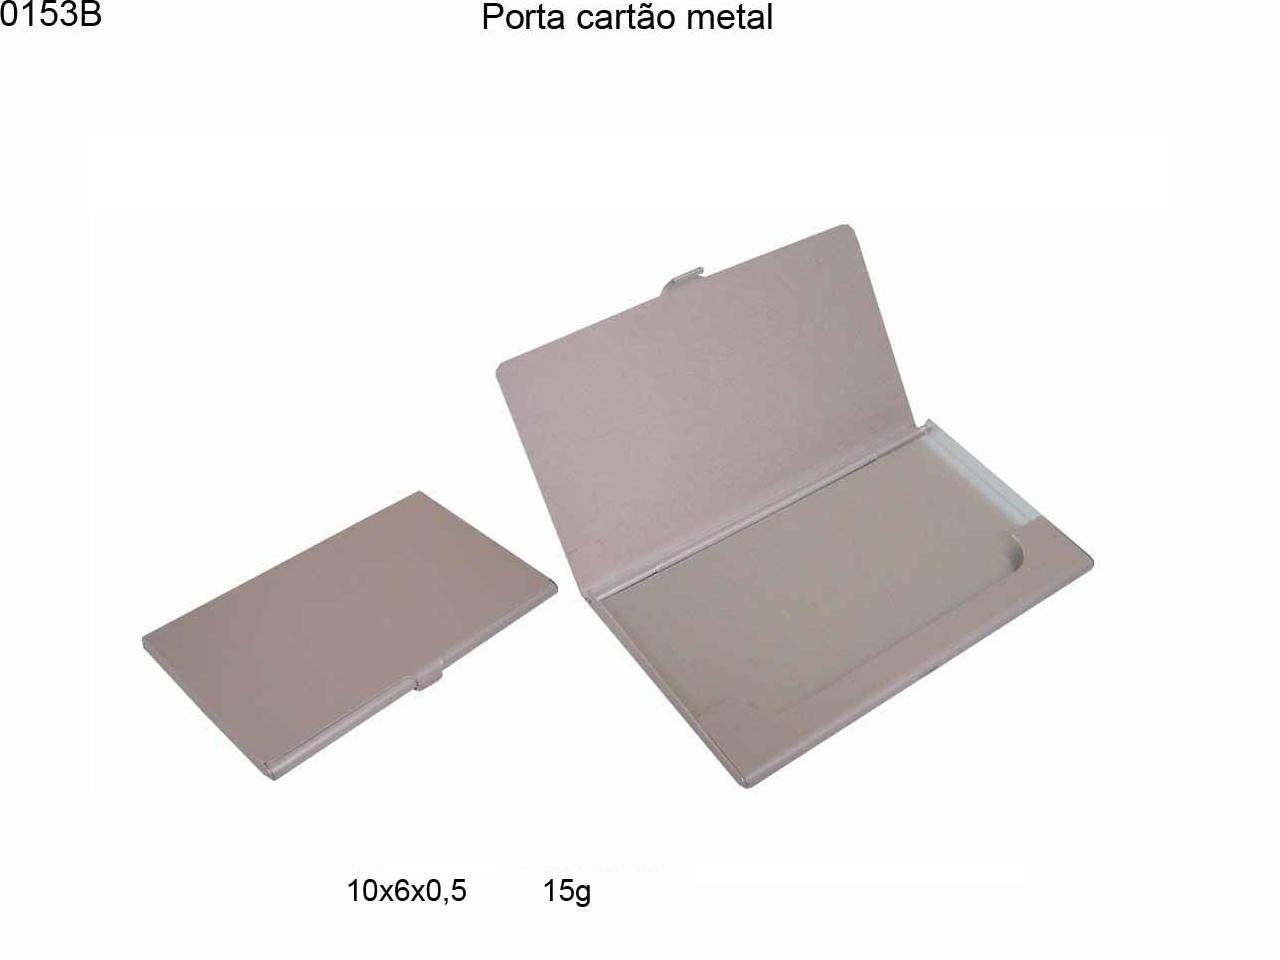 Porta cartao metal (0153B)